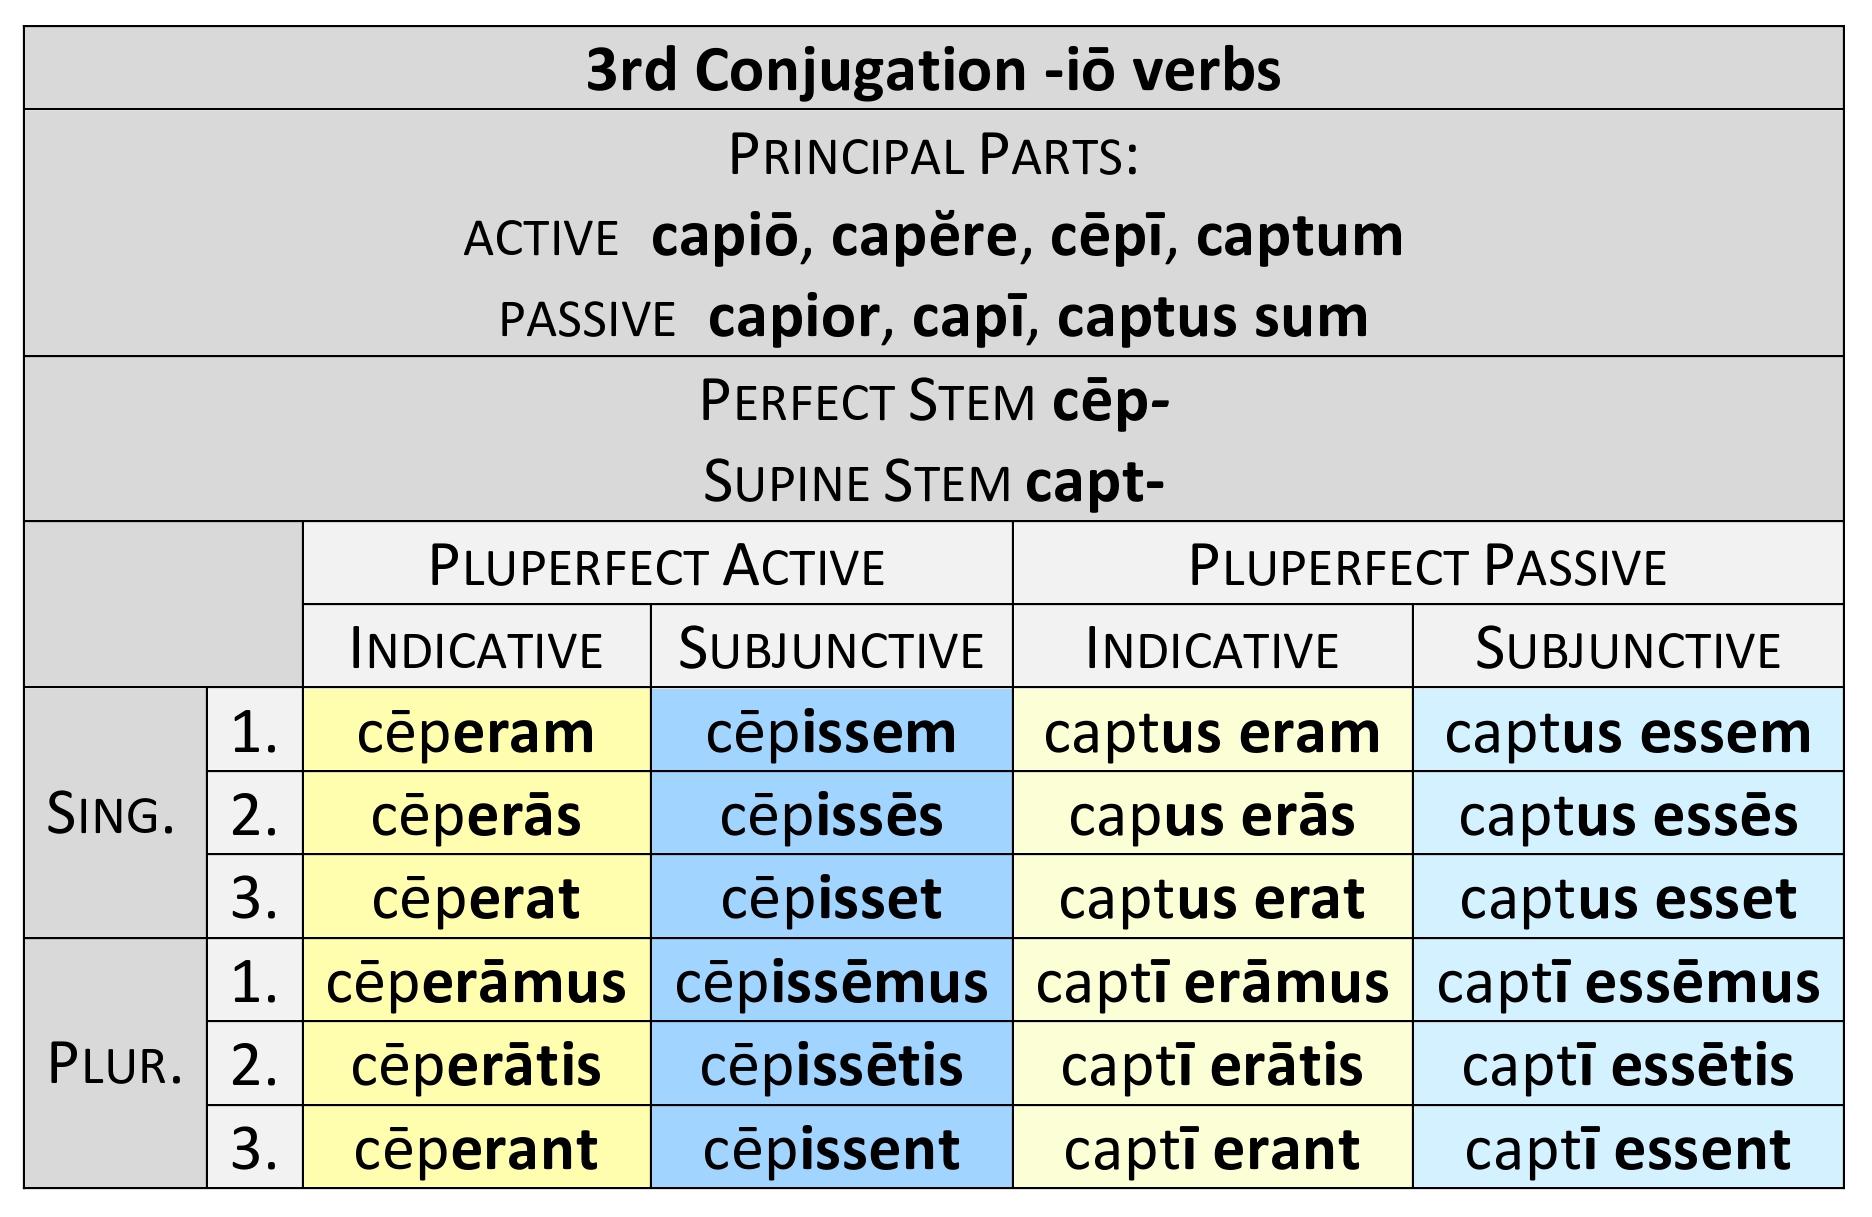 3rd Conjugation in -iō Pluperfect paradigm